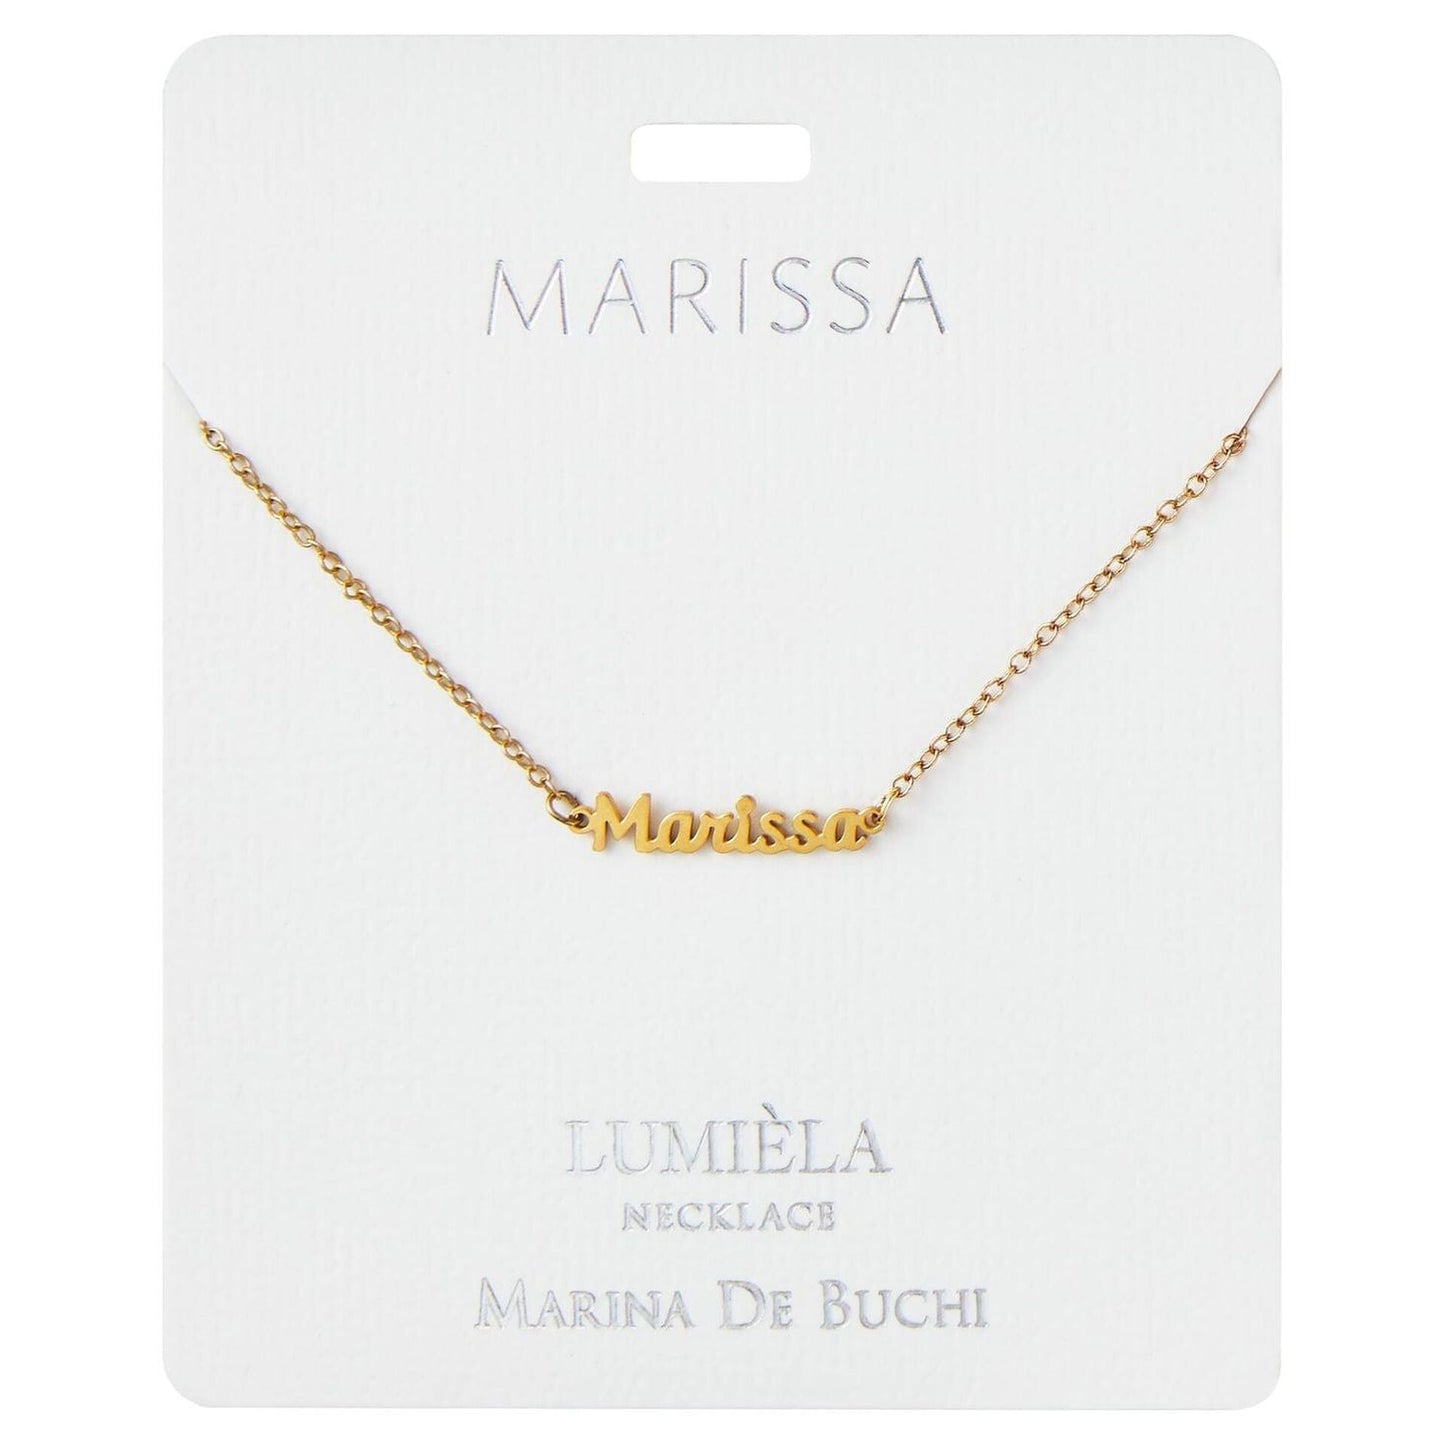 Lumiela Personalized Nameplate Miranda Necklace in Gold Tone